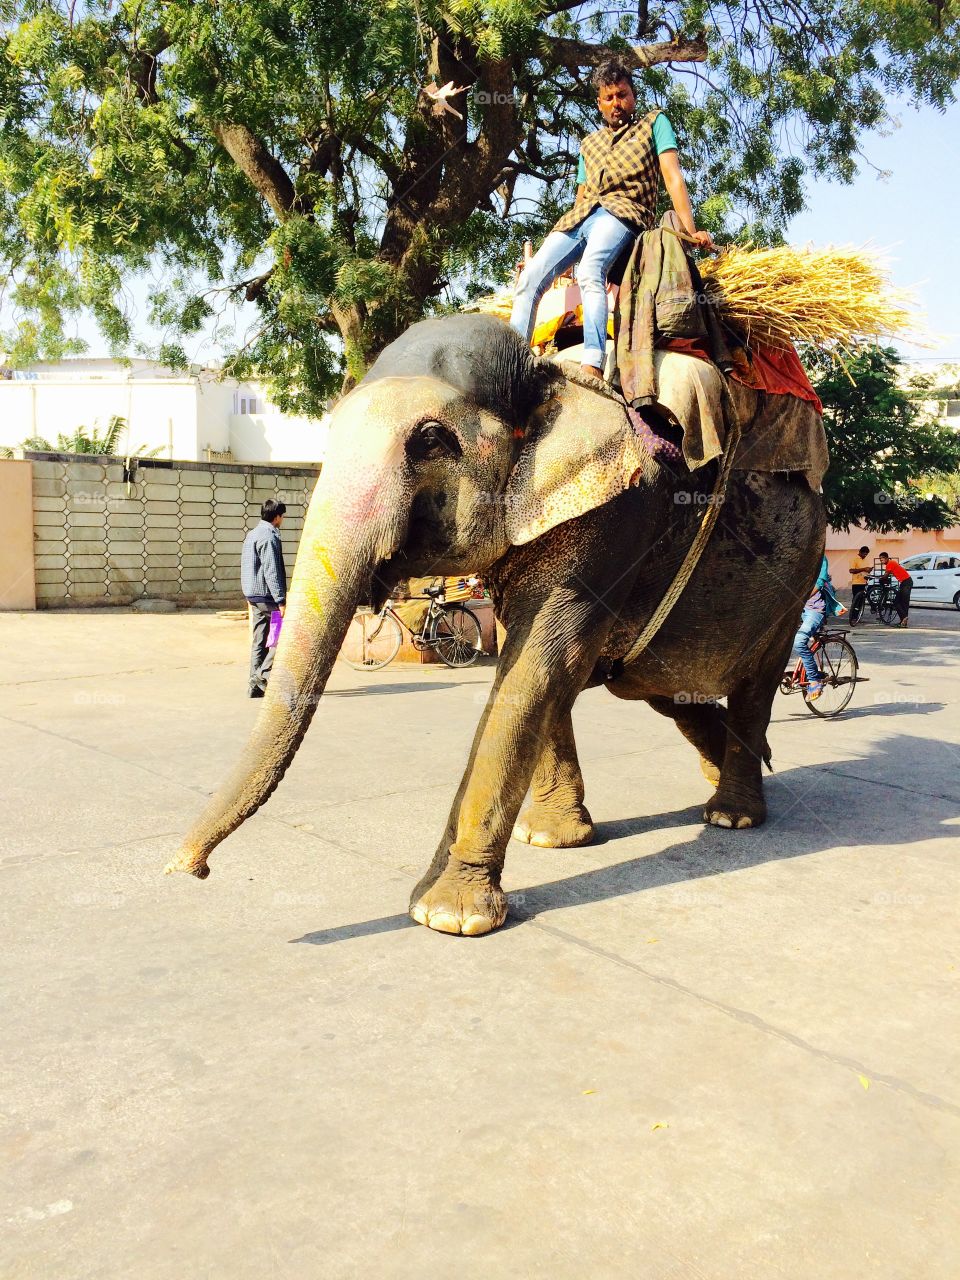 Walking on road elephant